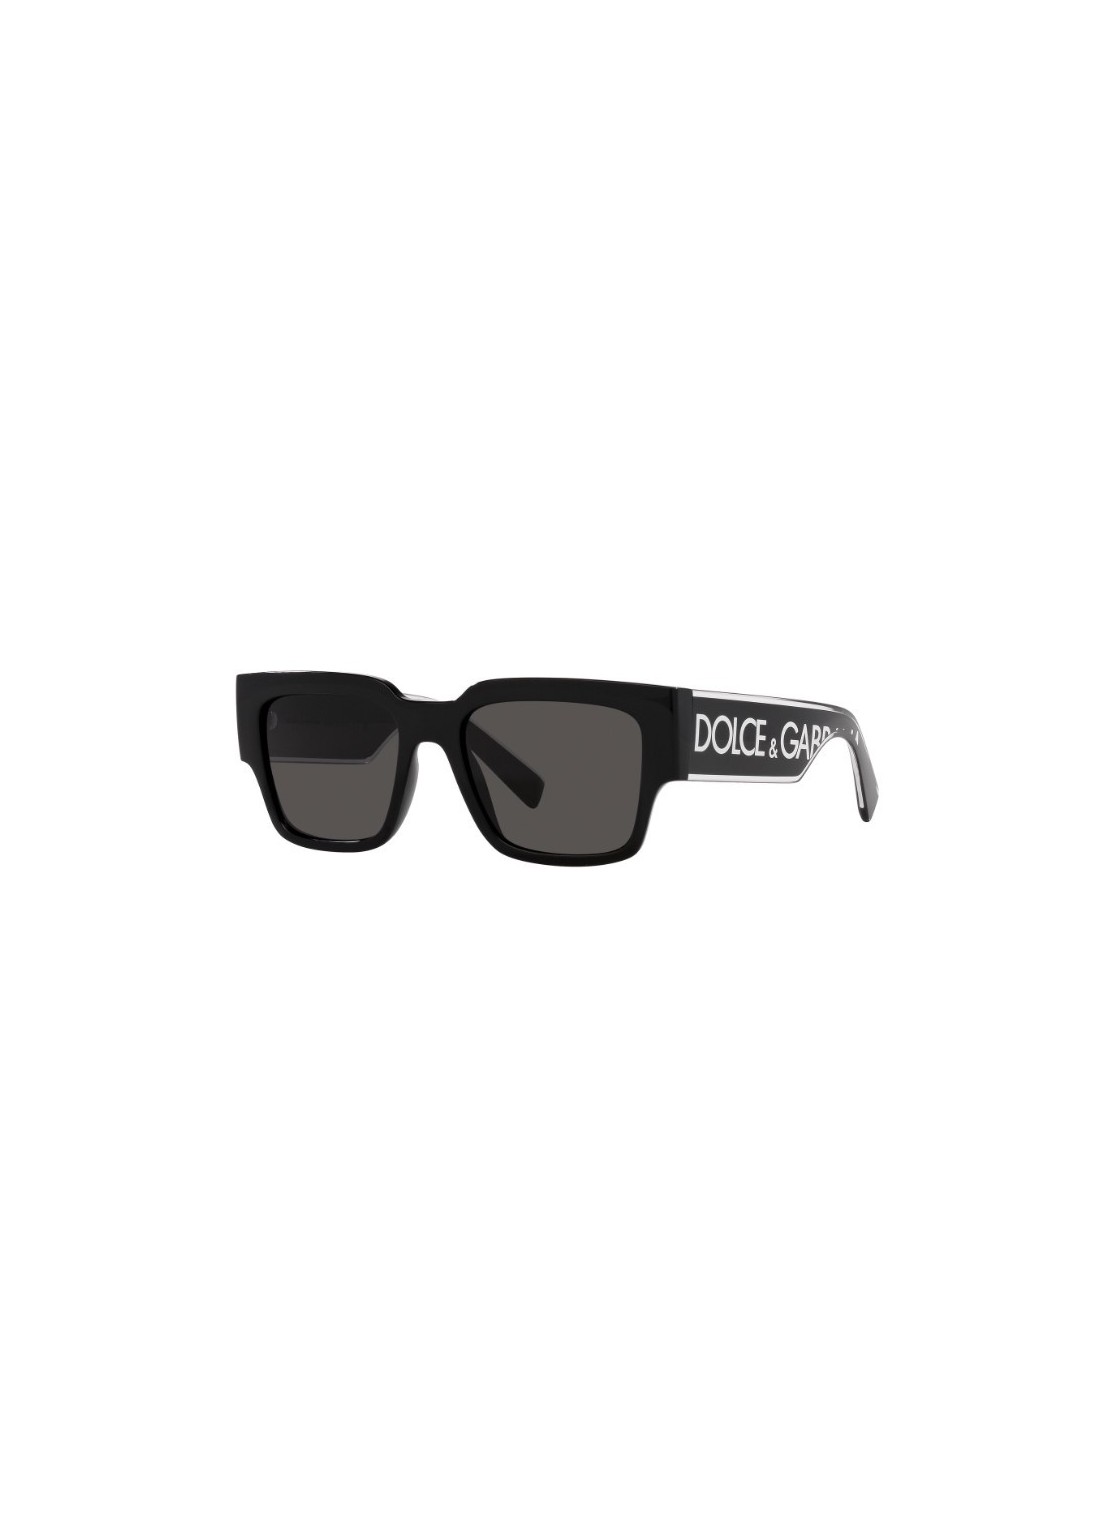 Gafas dolce&gabbana sunglasses woman 0dg6184 0dg6184 501 87 talla transparente
 